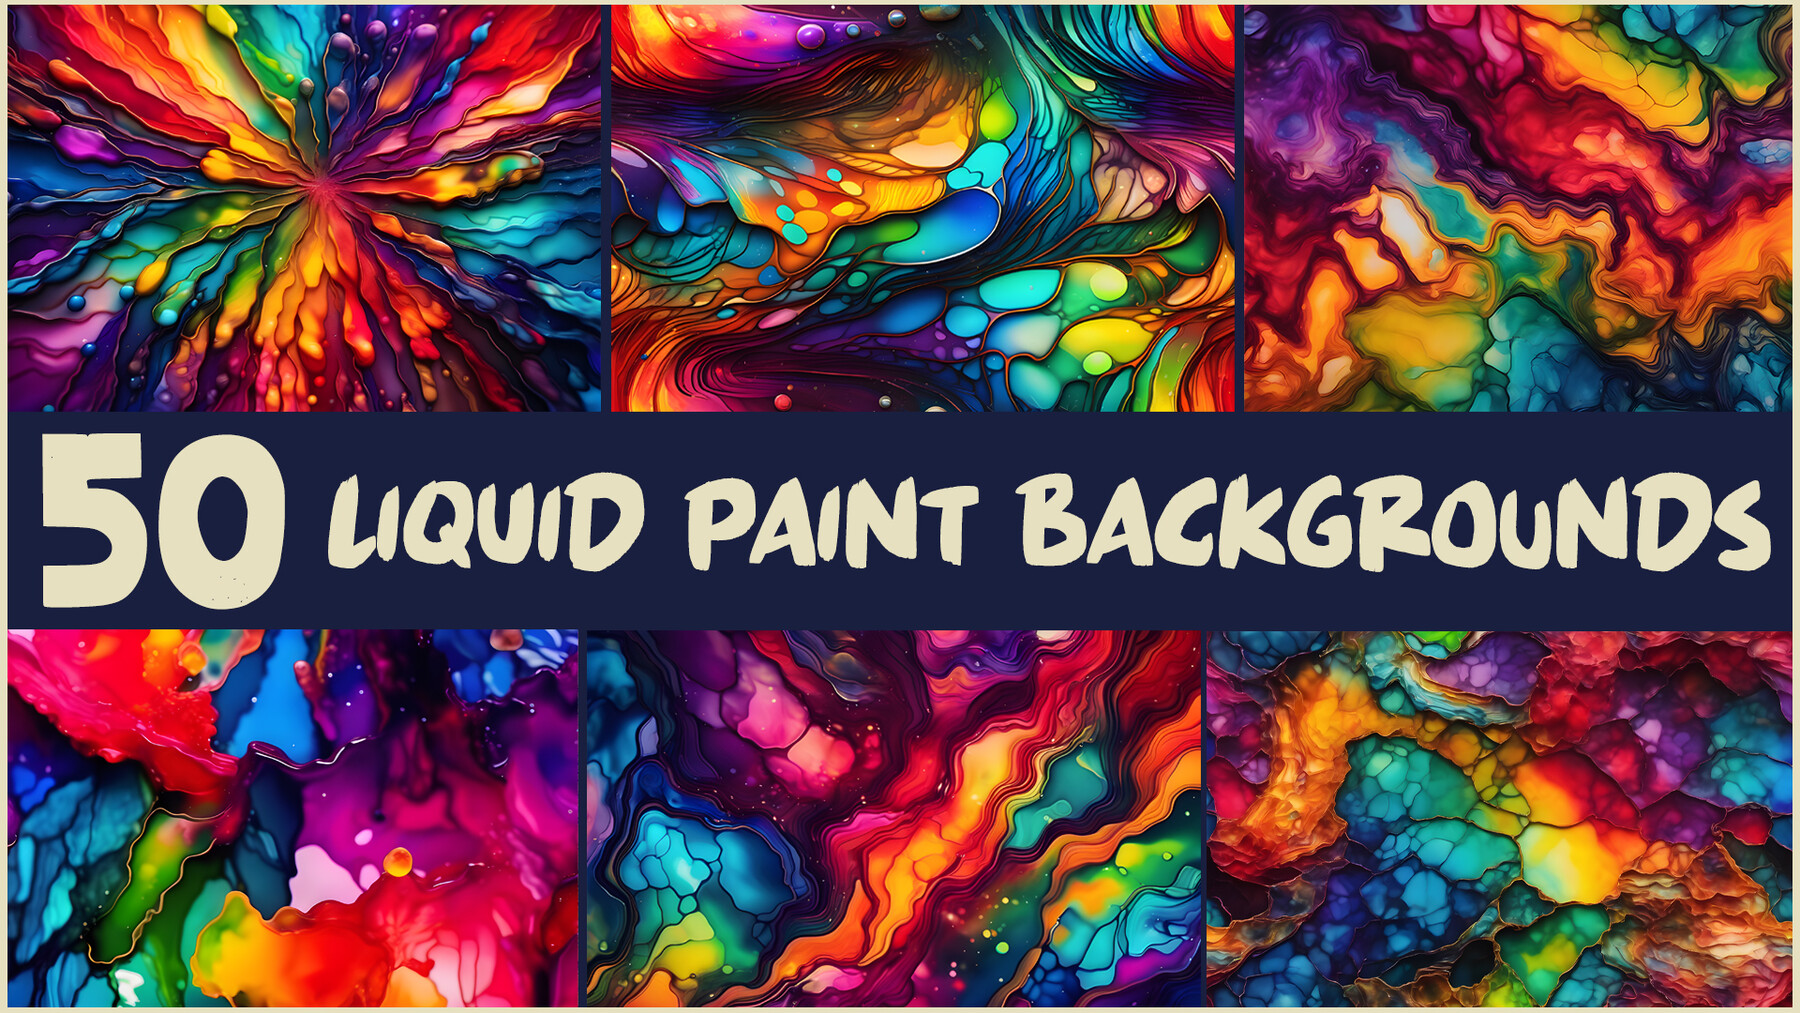 ArtStation - 50 Liquid Paint Backgrounds - Rainbow Colors Abstract ...